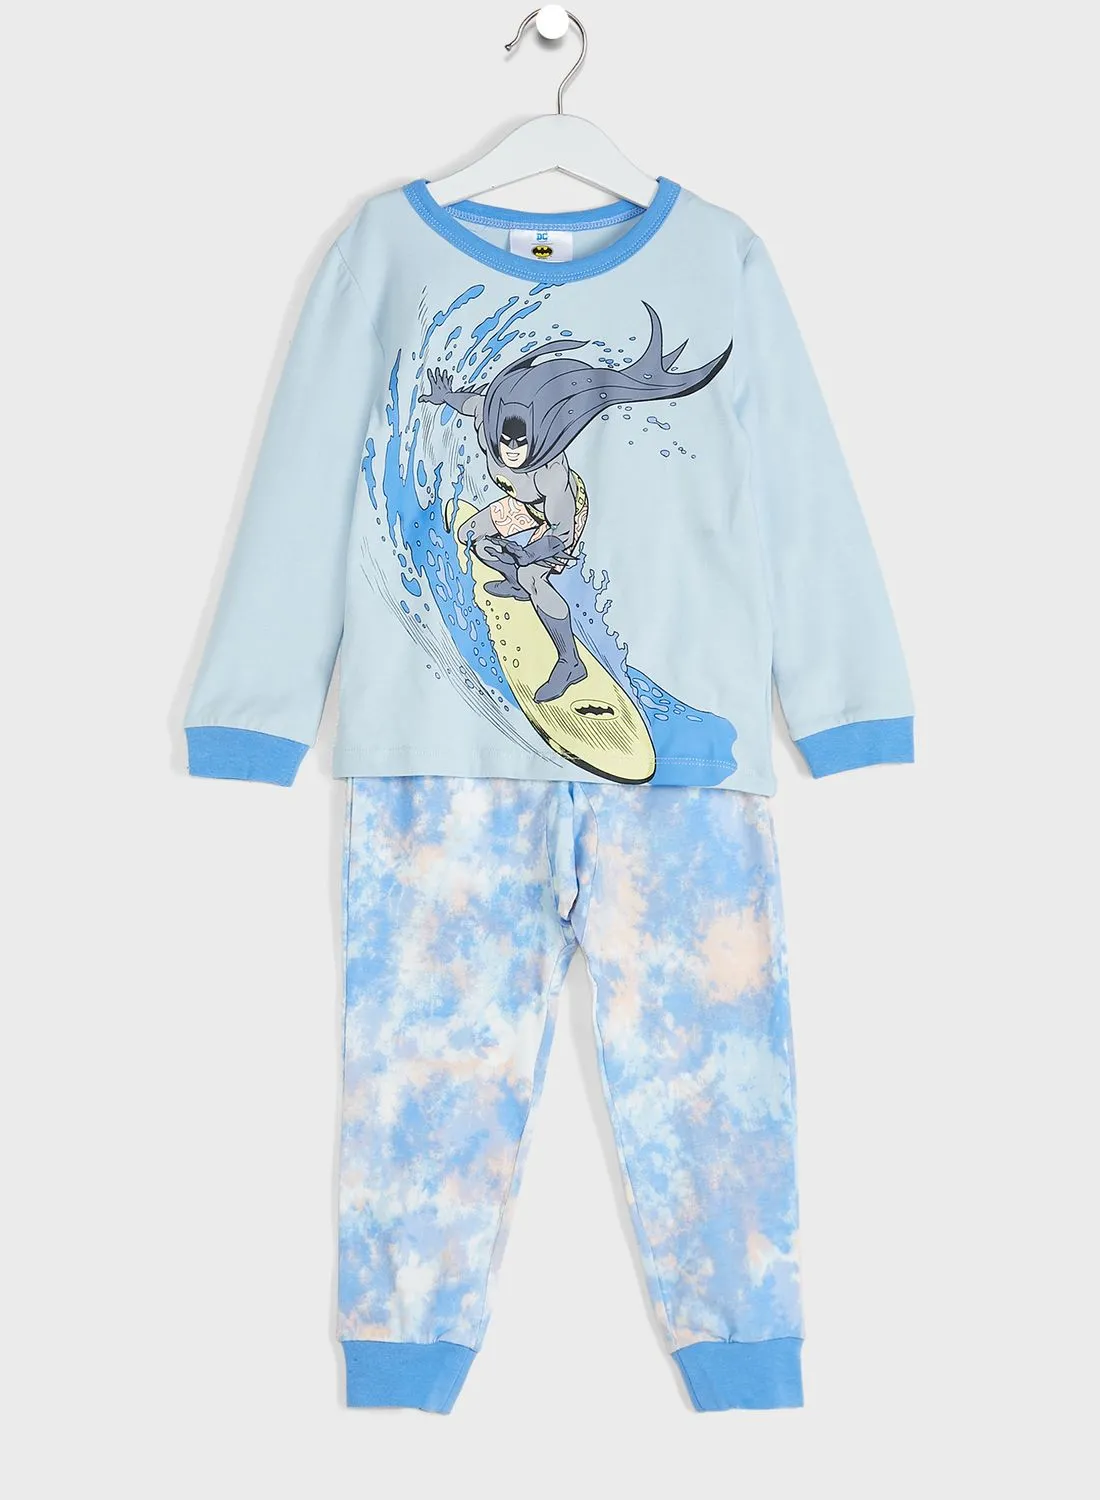 Cotton On Kids Batman Pyjama Set